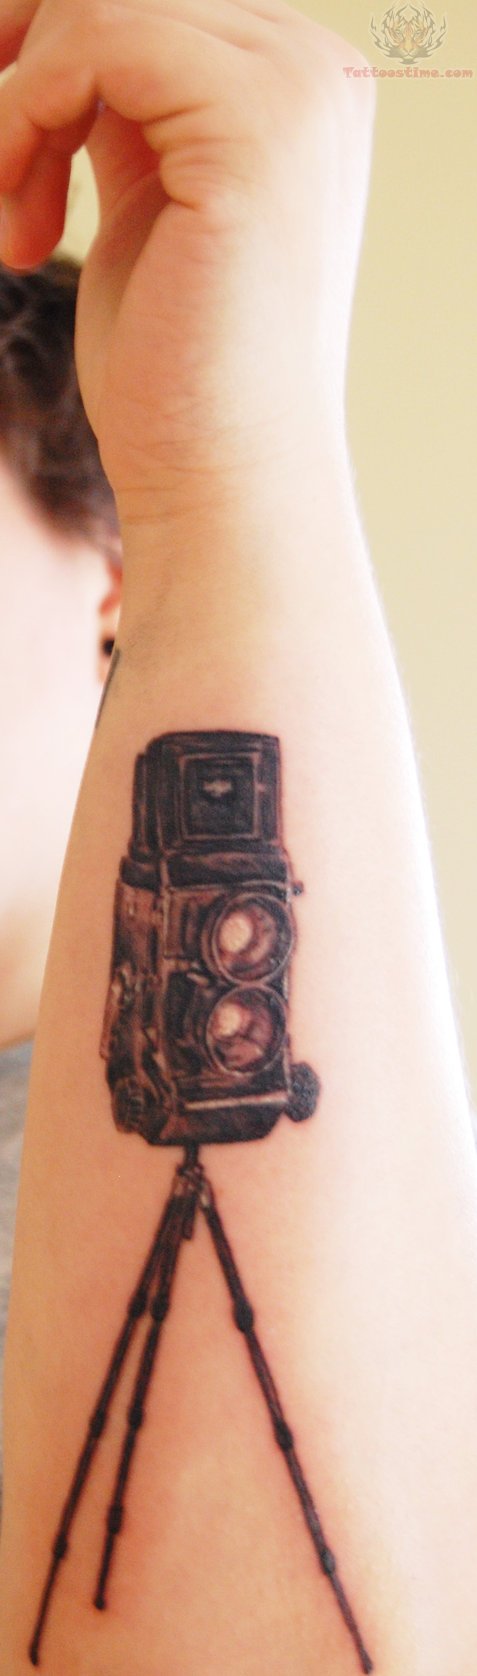 Cool Black Ink Movie Camera Tattoo On Forearm